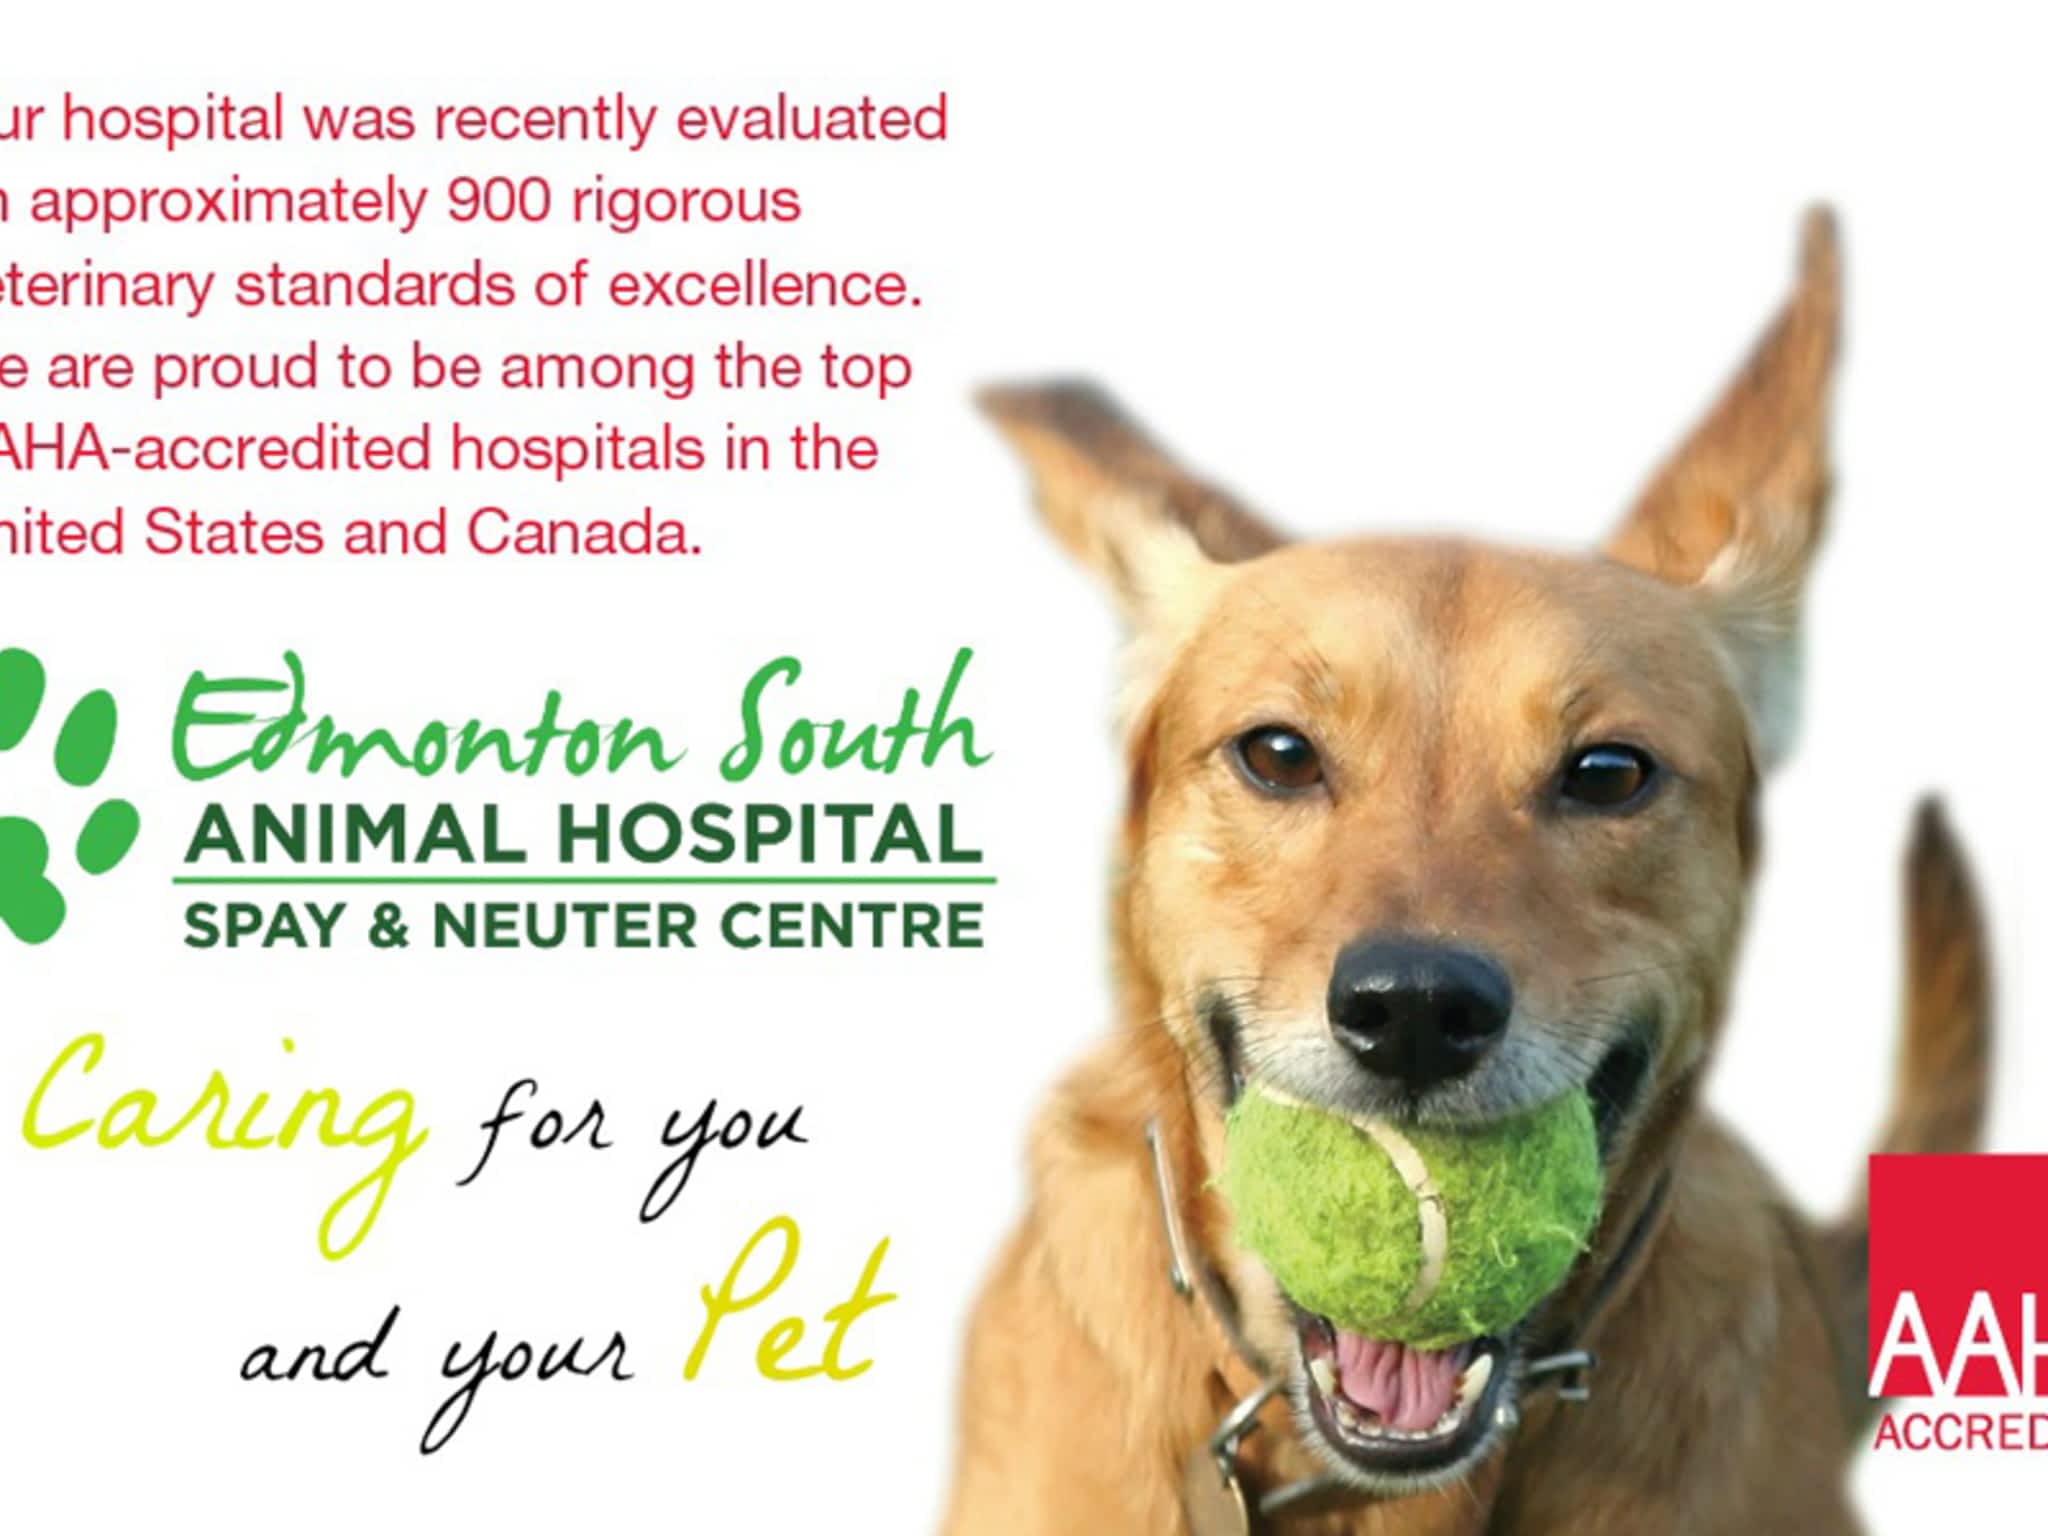 photo Edmonton South Animal Hospital Spay/Neuter Centre